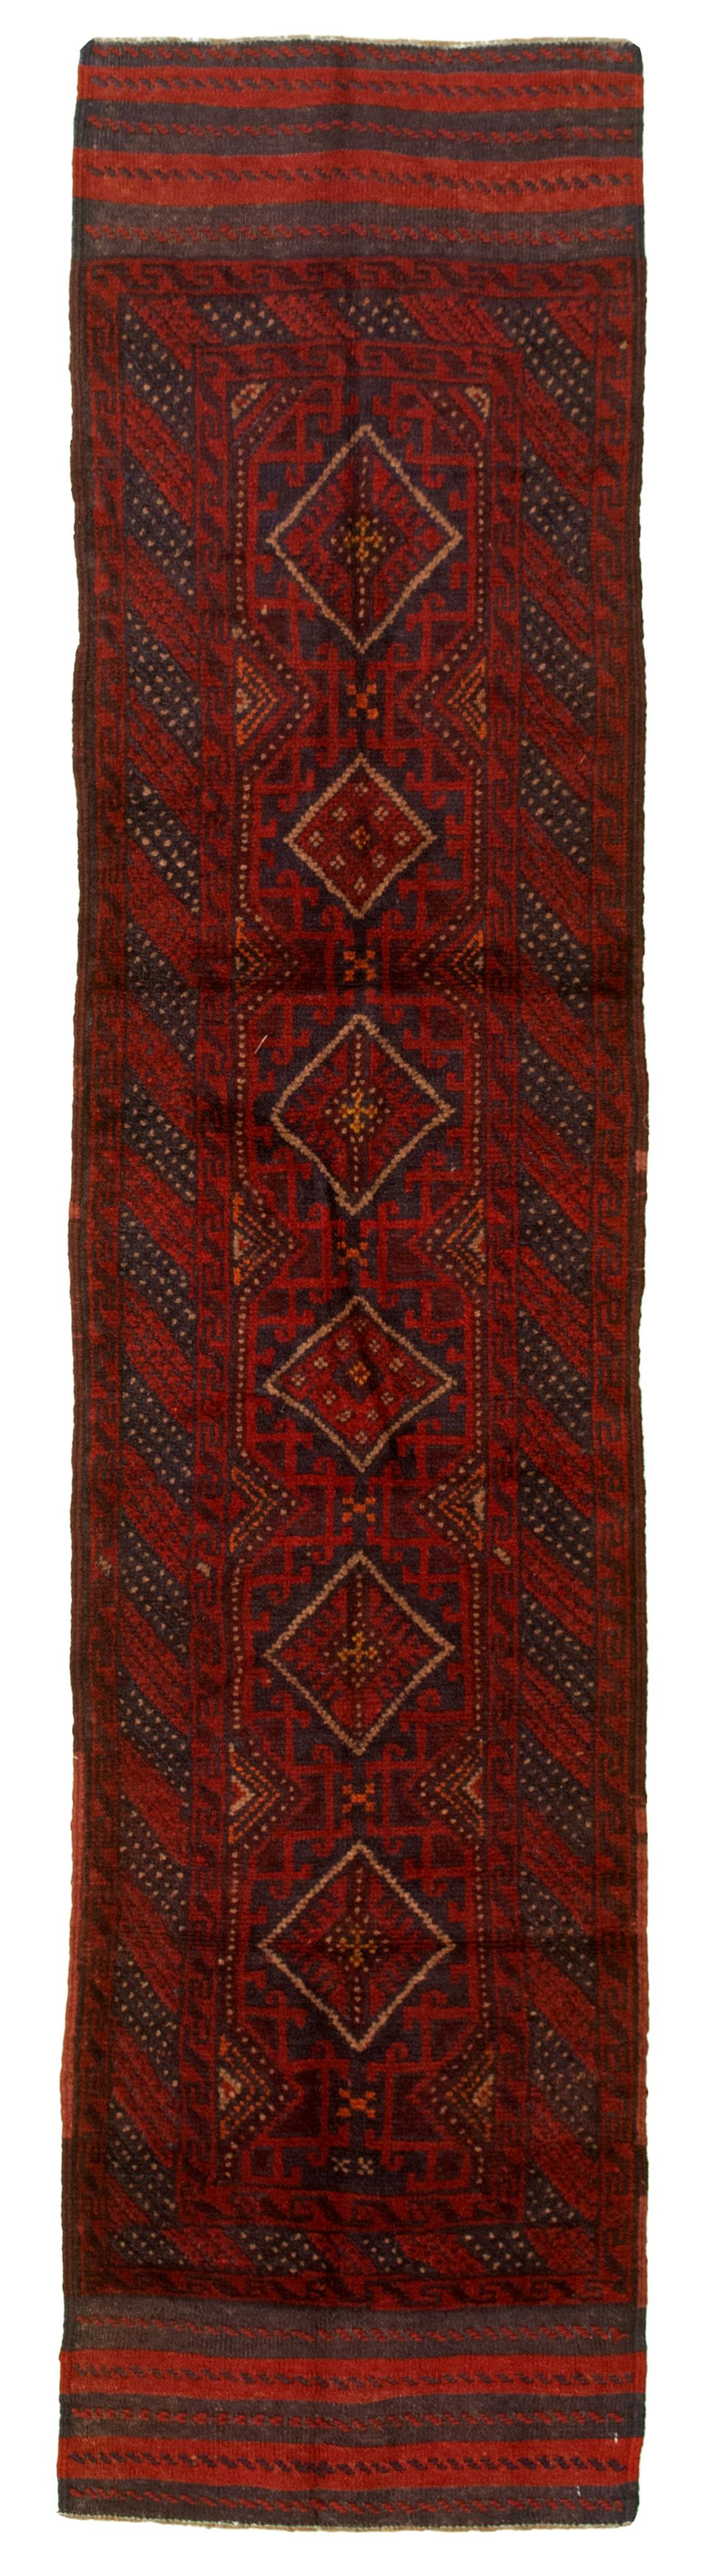 Hand-knotted Tajik Caucasian Red Wool Rug 2'1" x 8'9"  Size: 2'1" x 8'9"  